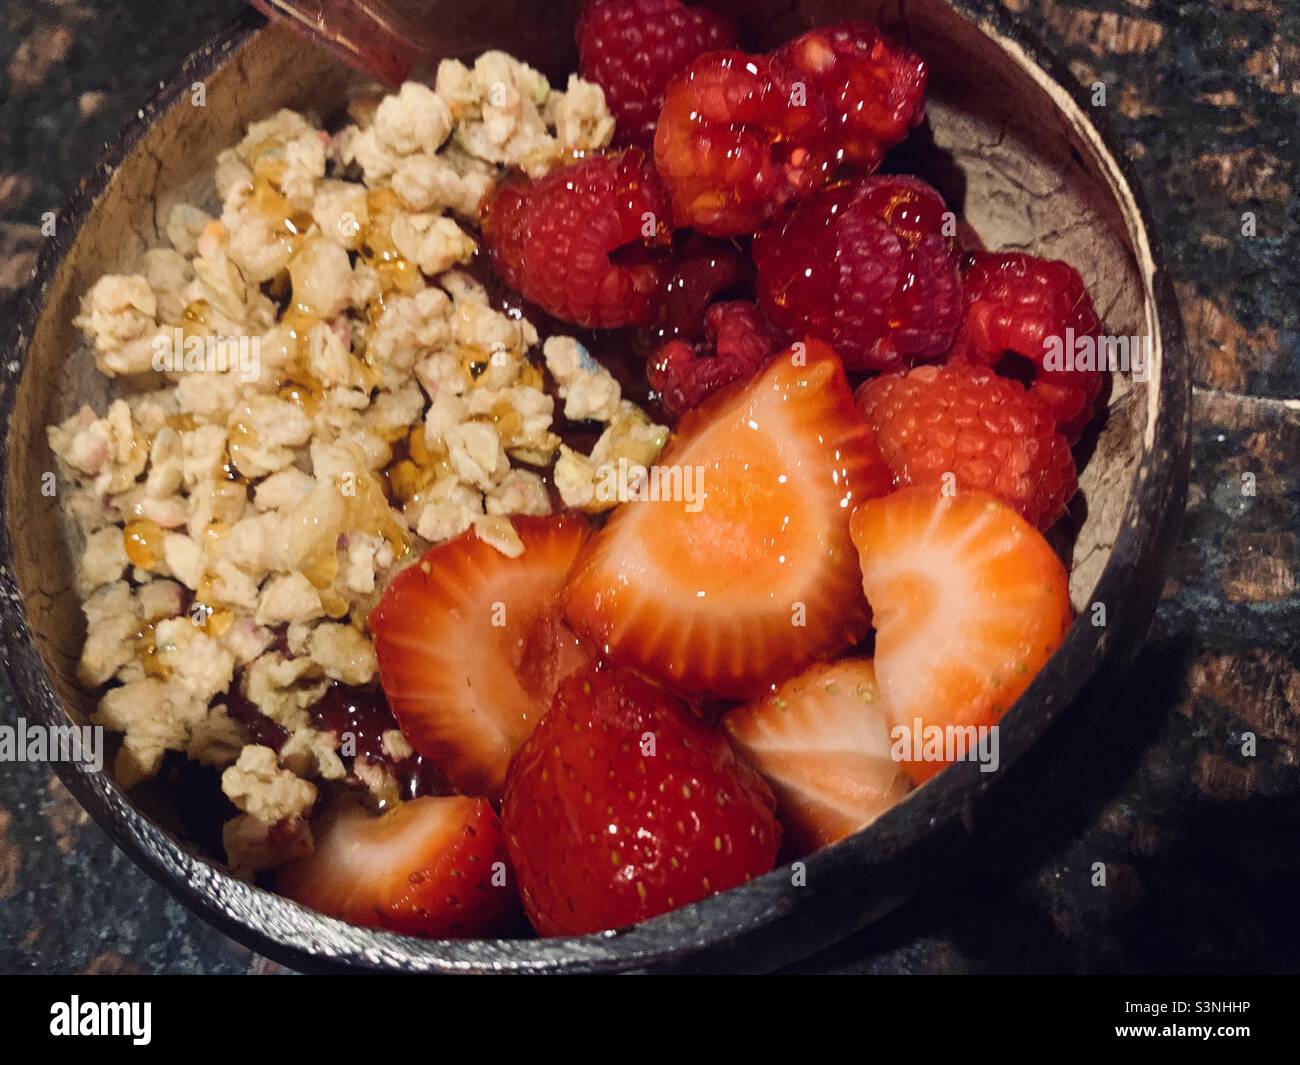 Açaí fruit bowl, Fruit bowl with granola, strawberries and raspberries Stock Photo